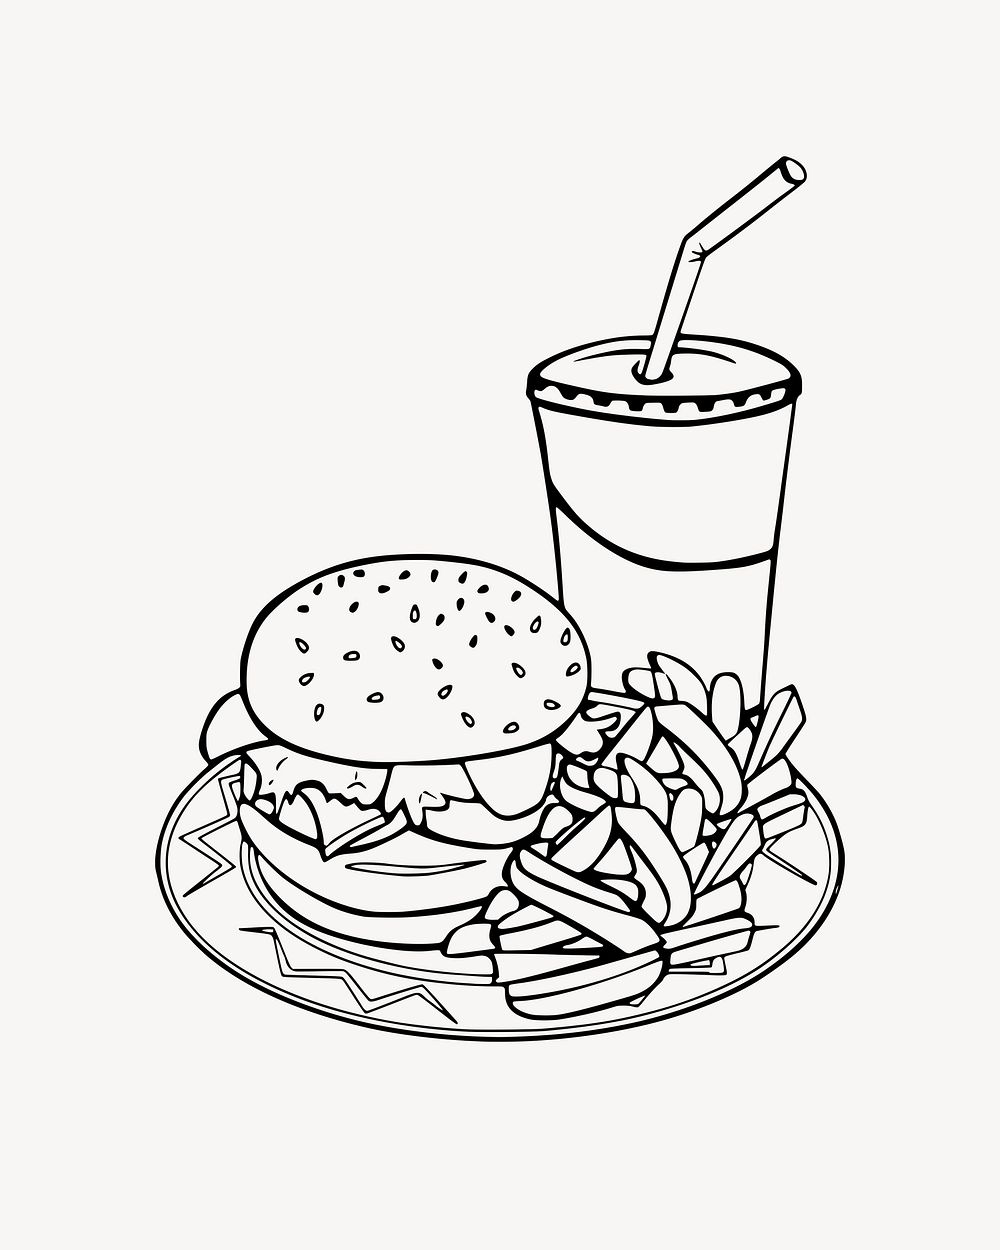 Fast food clipart, illustration psd. Free public domain CC0 image.